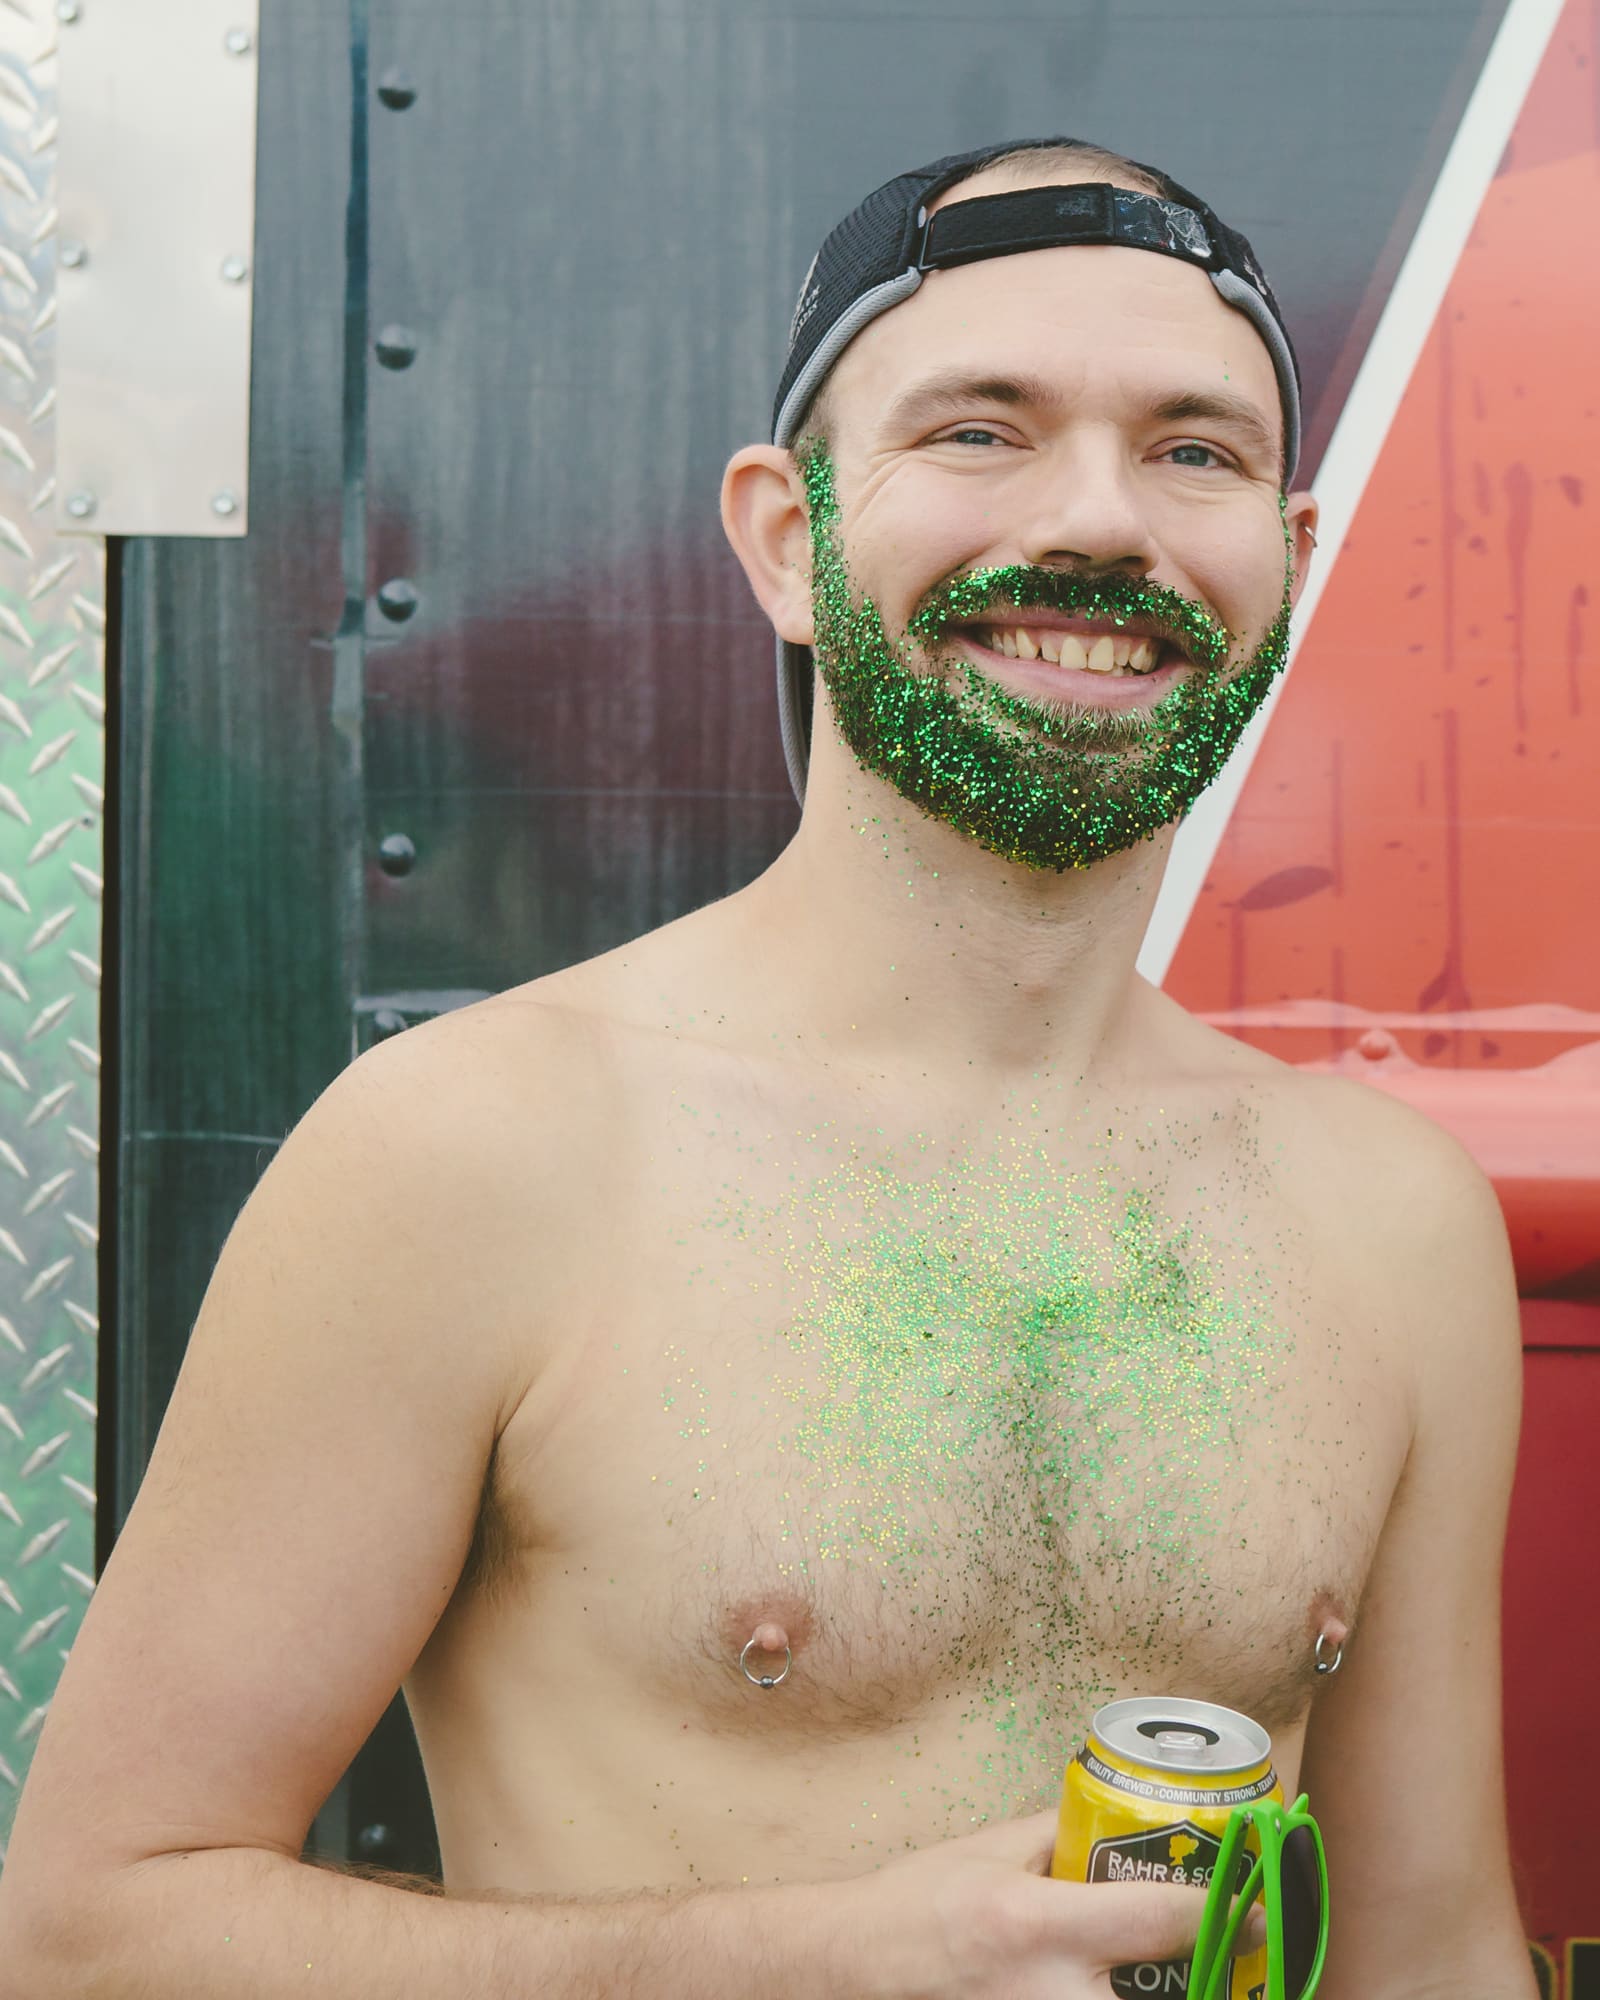 Green glitter beard and pierced nipples!